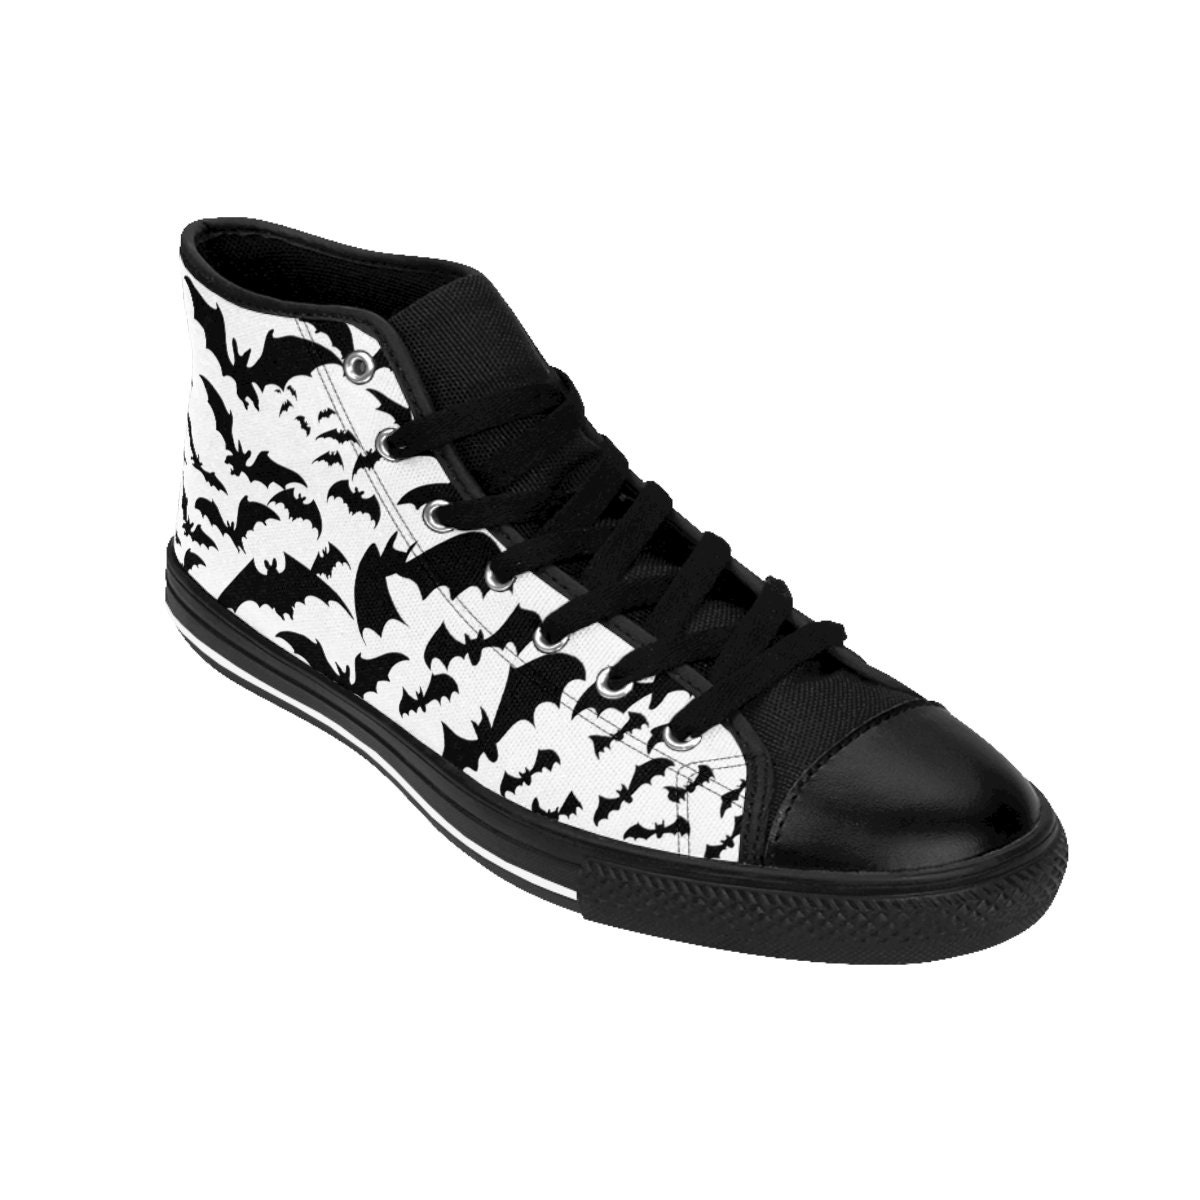 Mens Goth Shoes Bat Pattern Sneakers Batty Creepy Dark Aesthetic Footwear Alt Edgy Black White Vampire Gothic High Tops Macabre Gift Idea